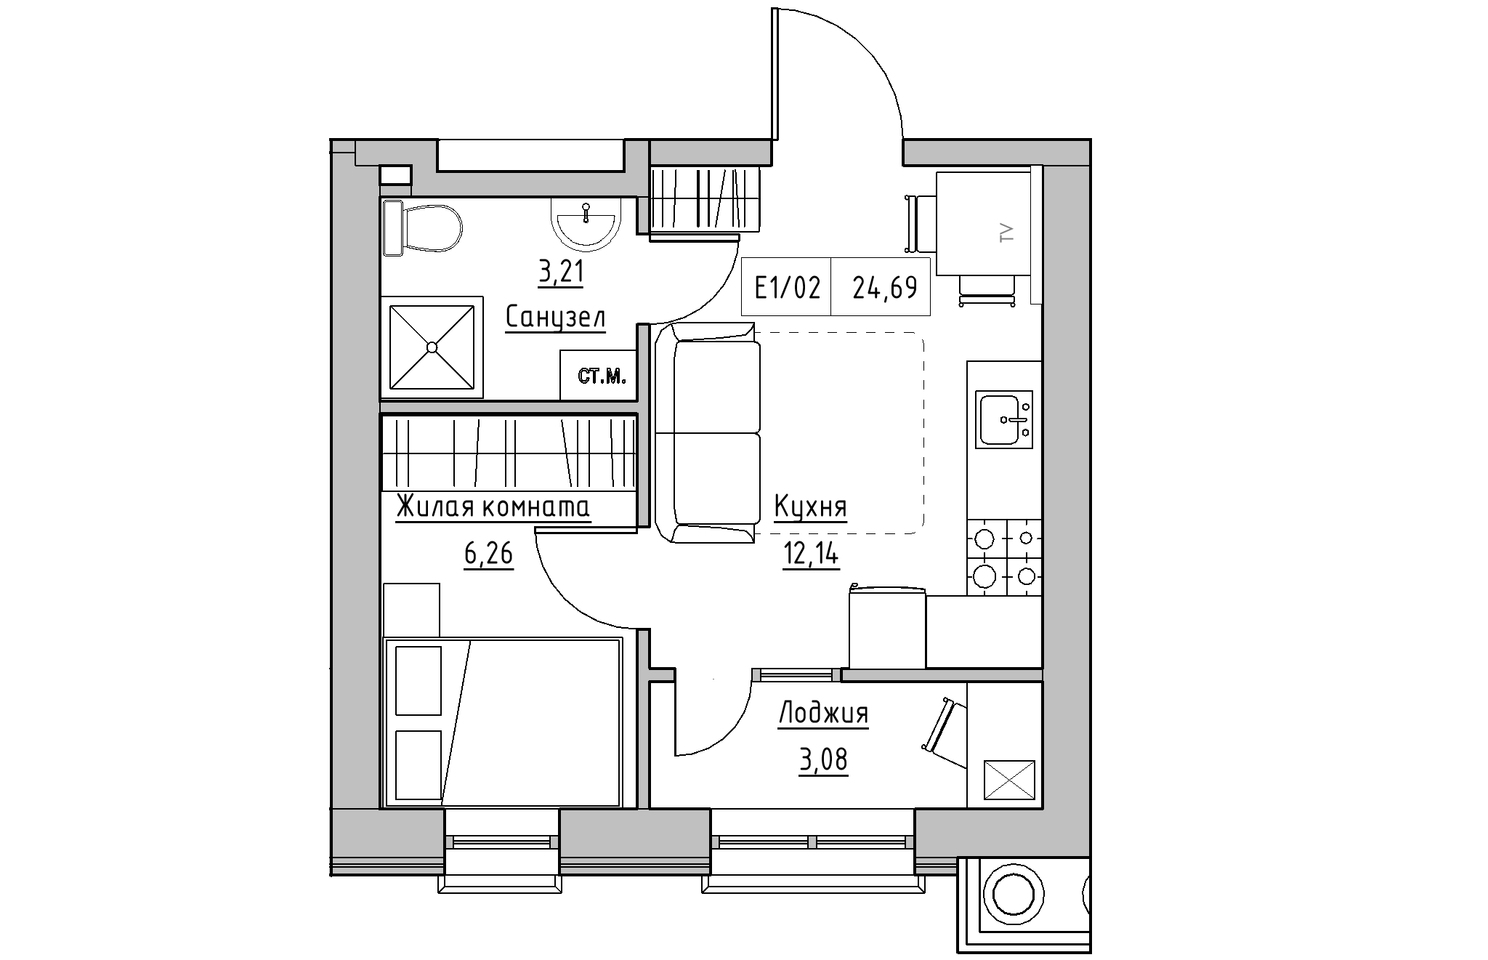 Planning 1-rm flats area 24.69m2, KS-010-03/0002.